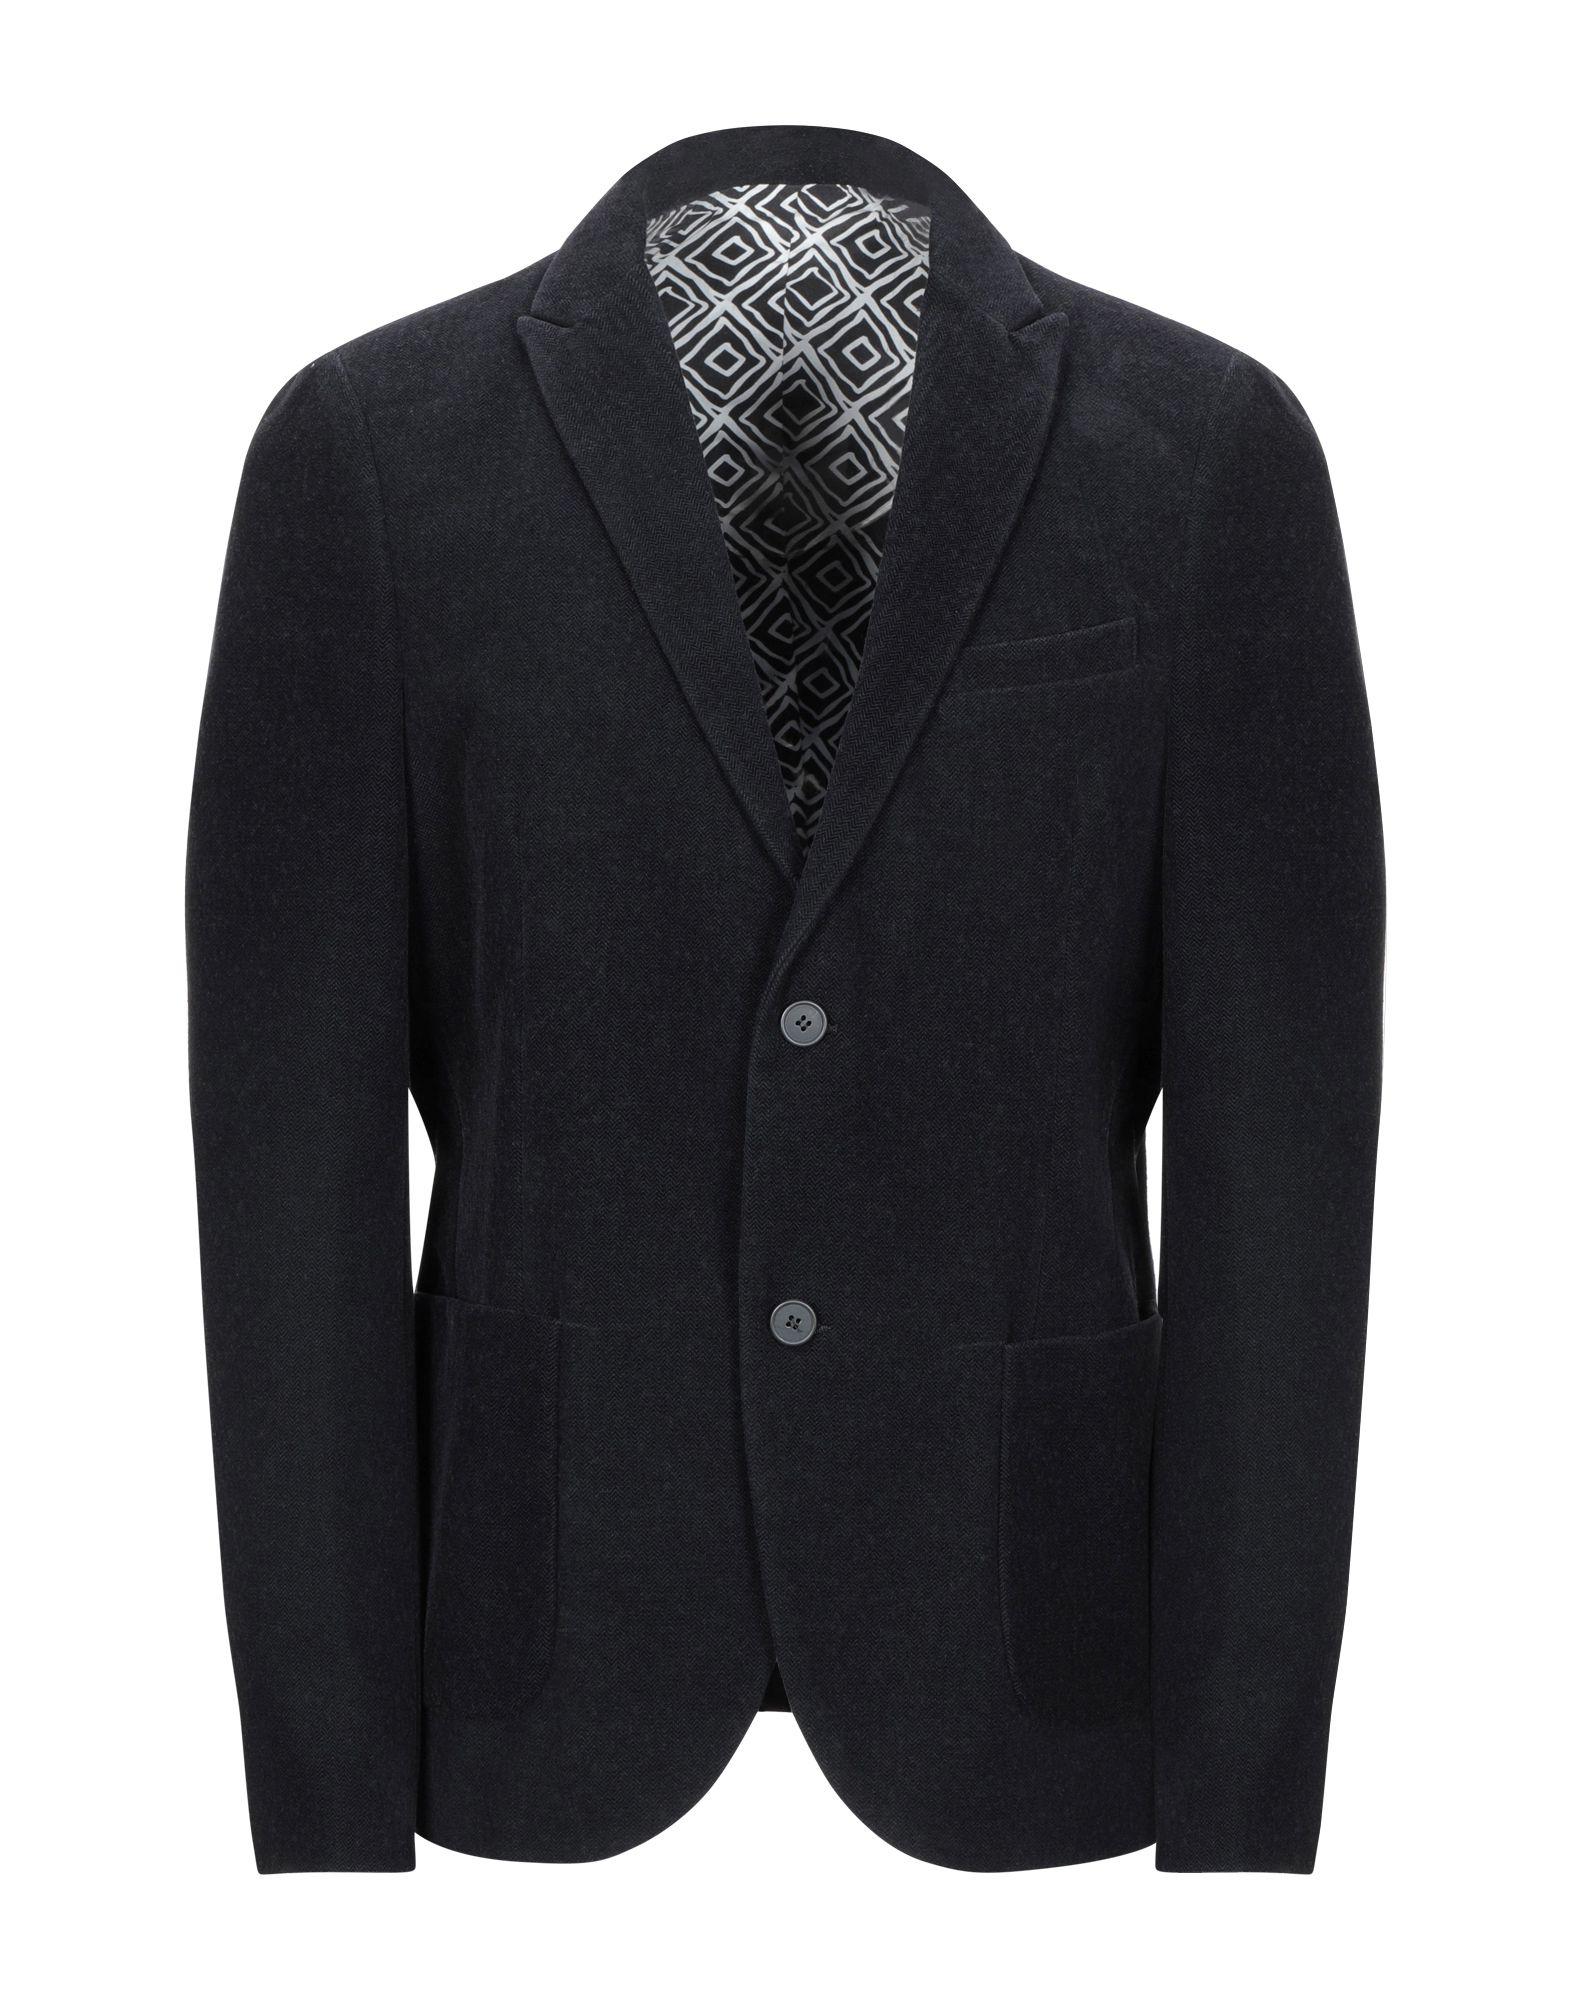 Officina 36 Velvet Suit Jacket in Black for Men - Lyst